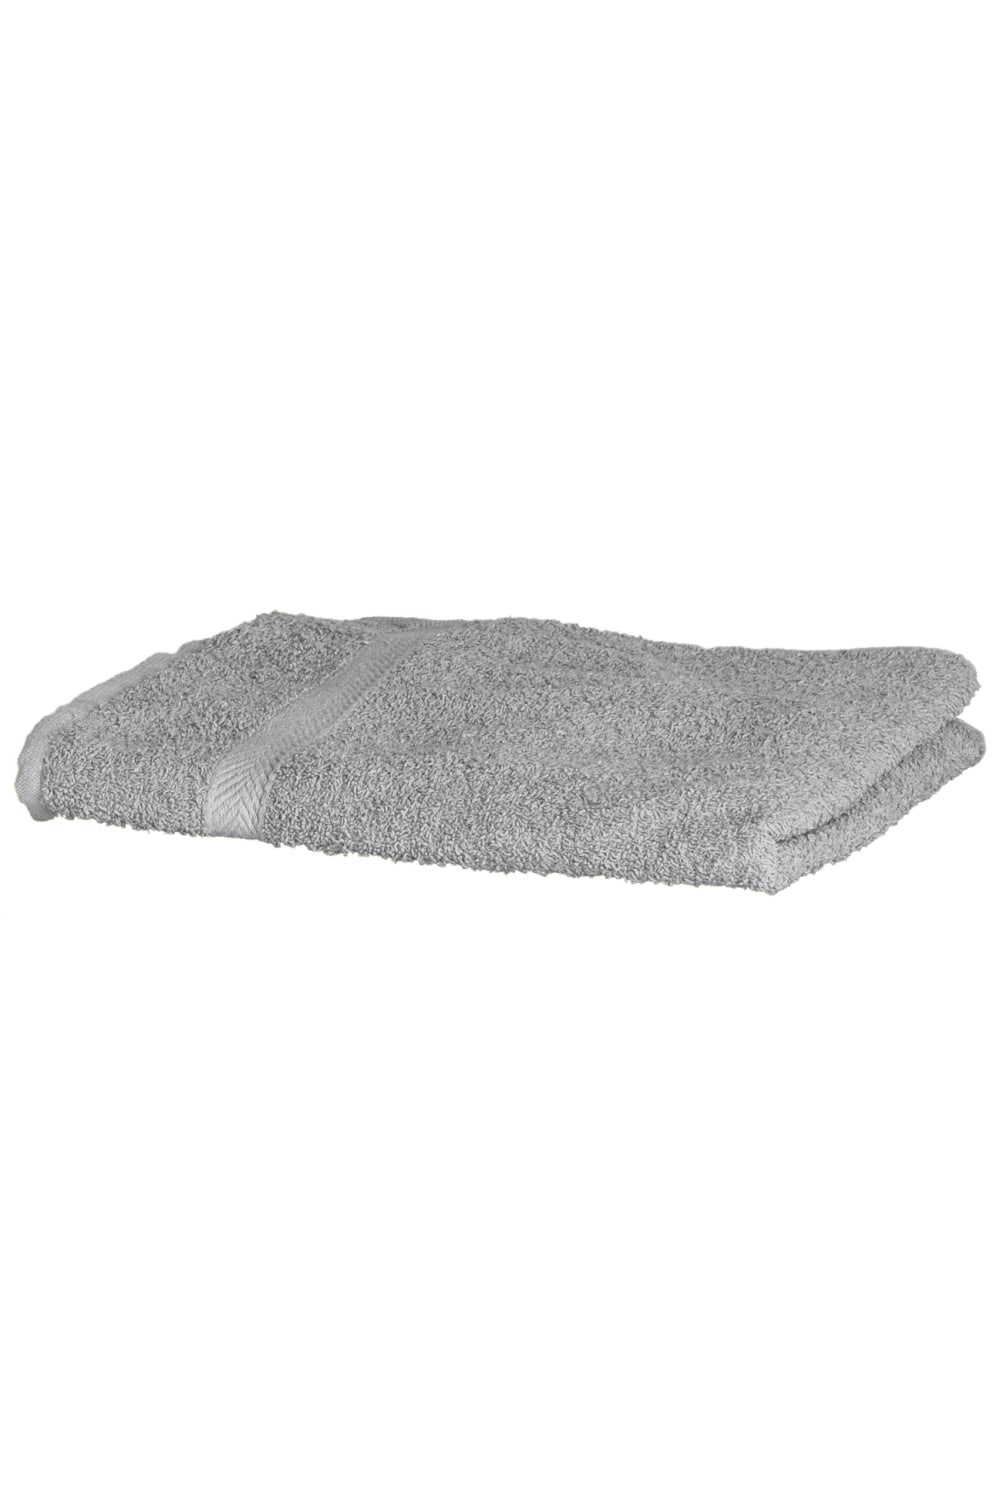 Towel City Luxury Range 550 GSM - Bath Towel (70 X 130 CM)